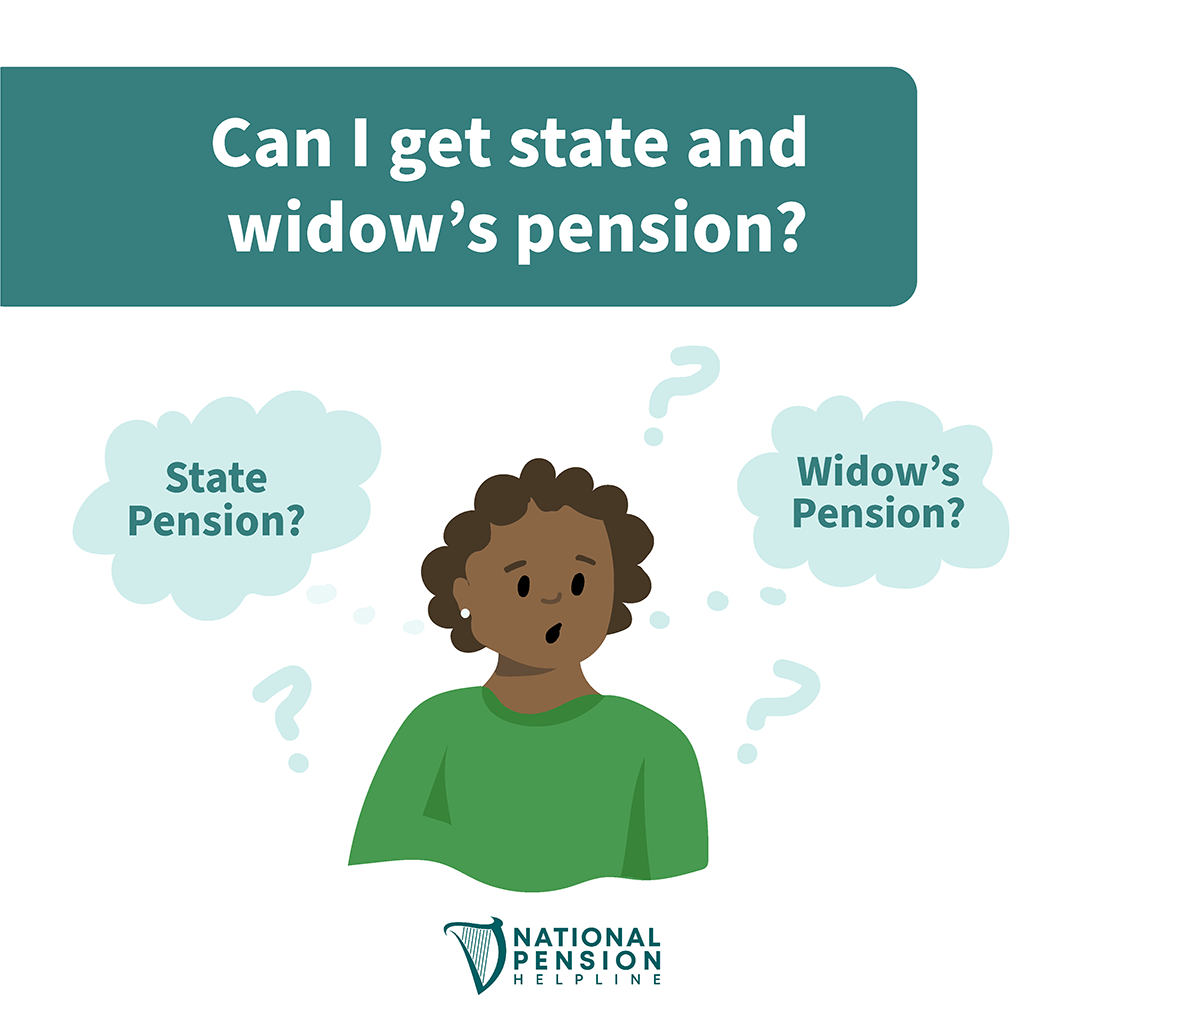 Widows Pension Ireland National Pension Helpline